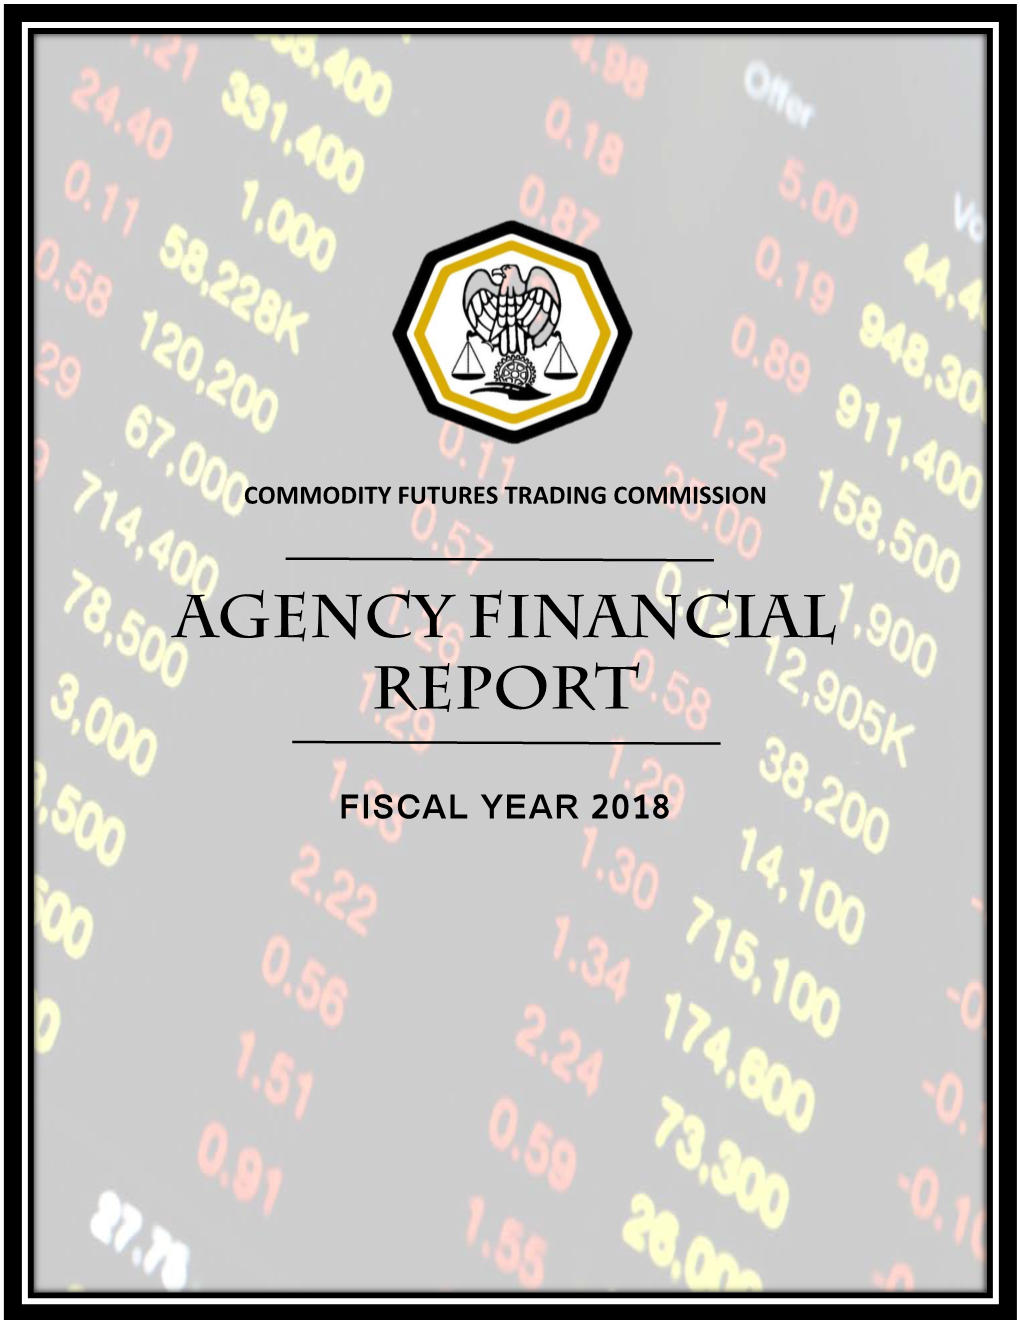 FY 2018 Agency Financial Report, November 2018